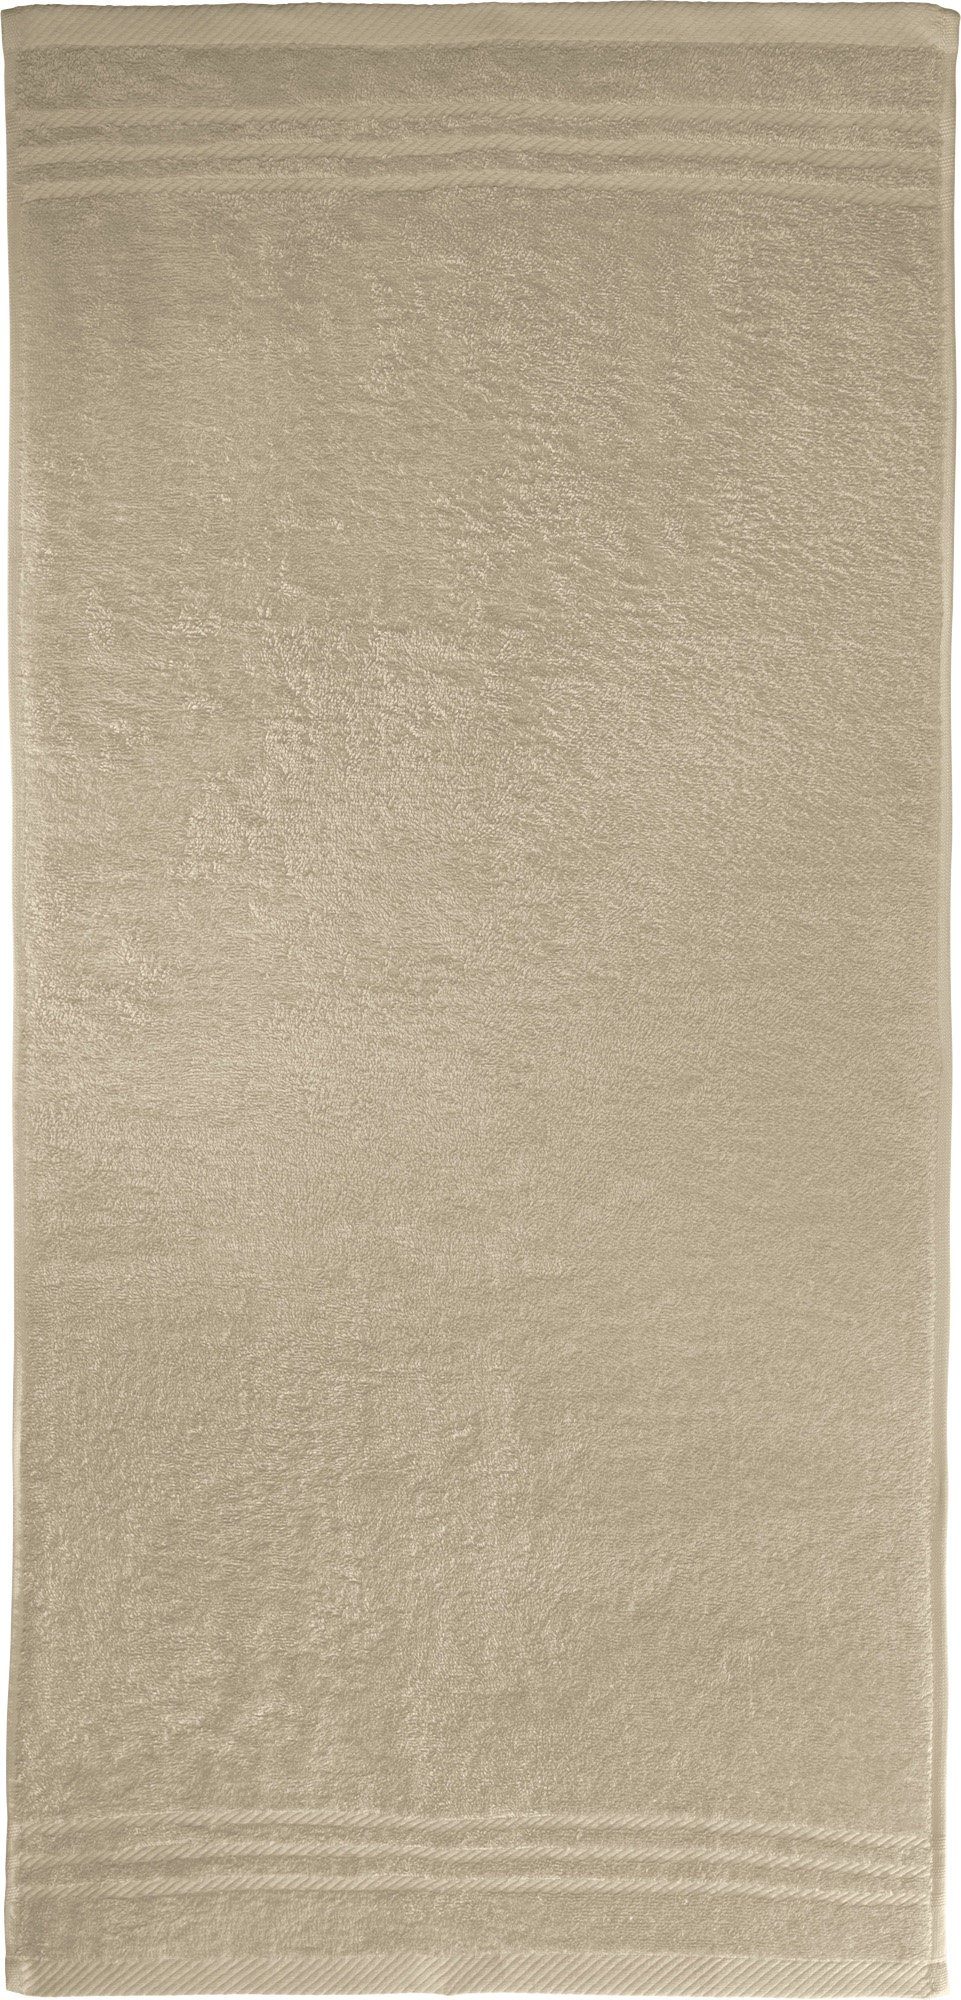 REDBEST Handtuch Handtuch, Frottier (1-St), Walk-Frottier Uni beige